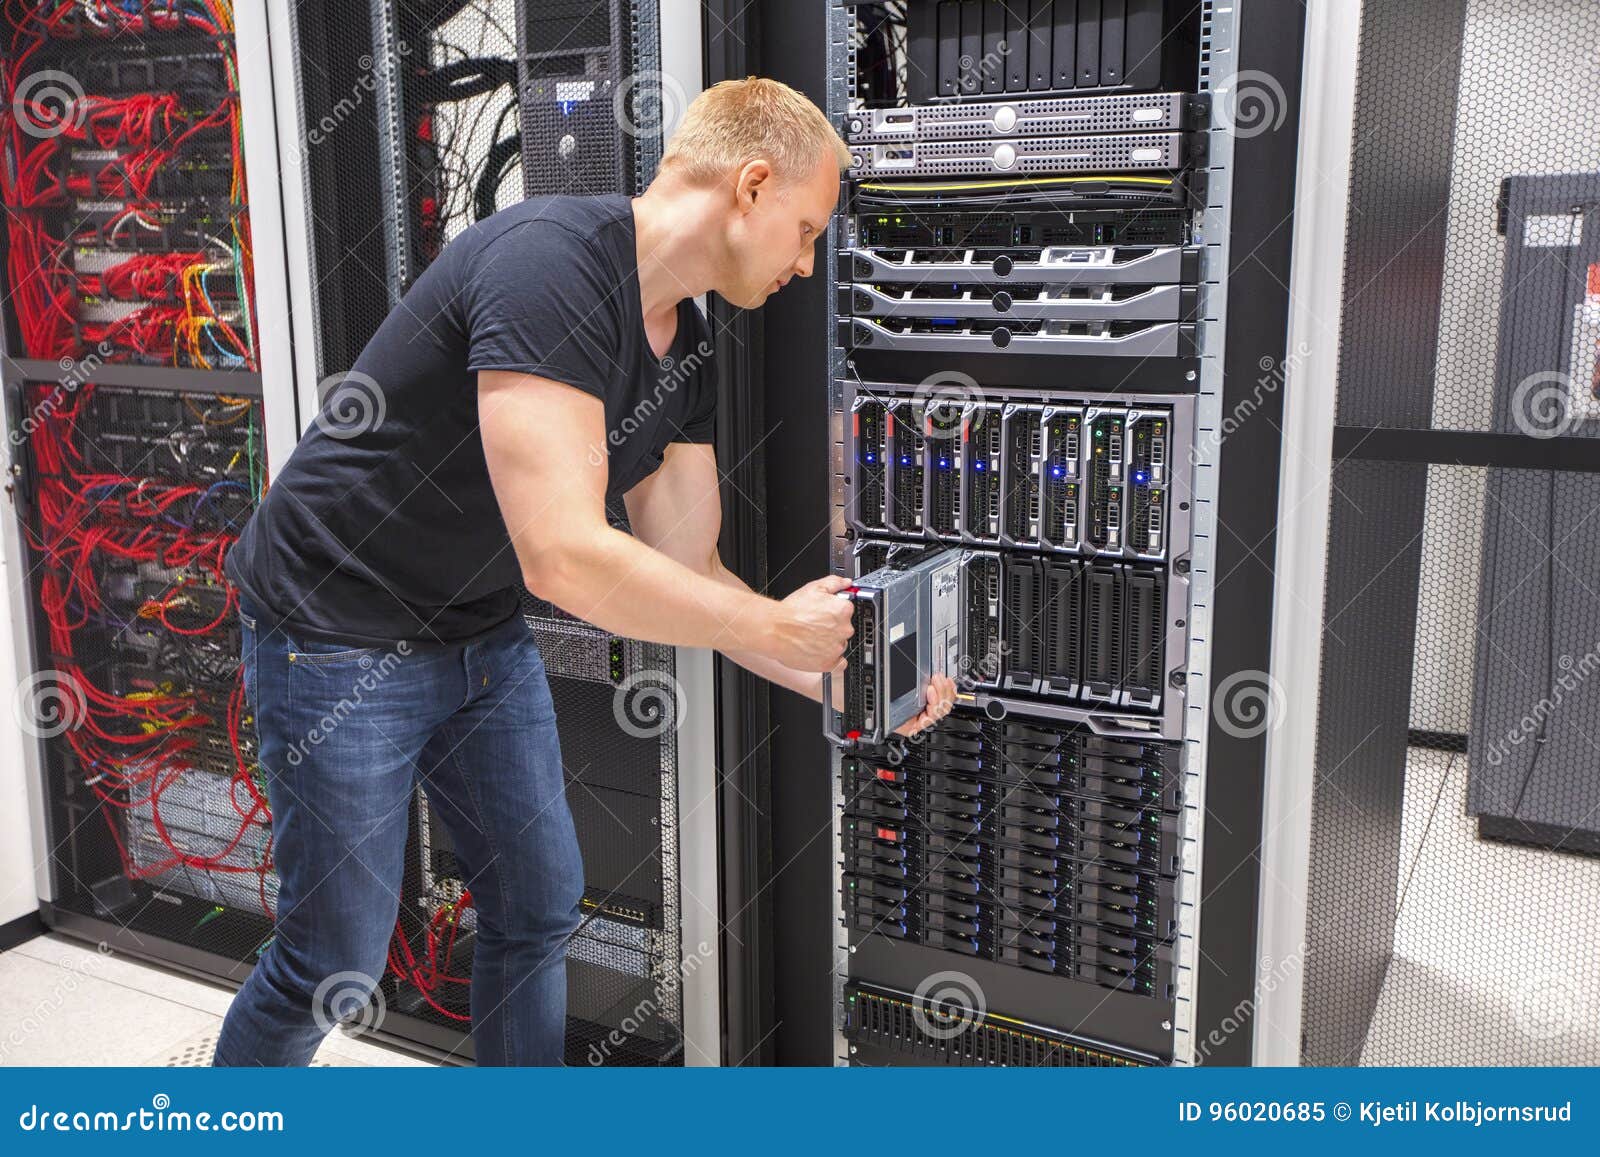 computer engineer installing blade server in datacenter